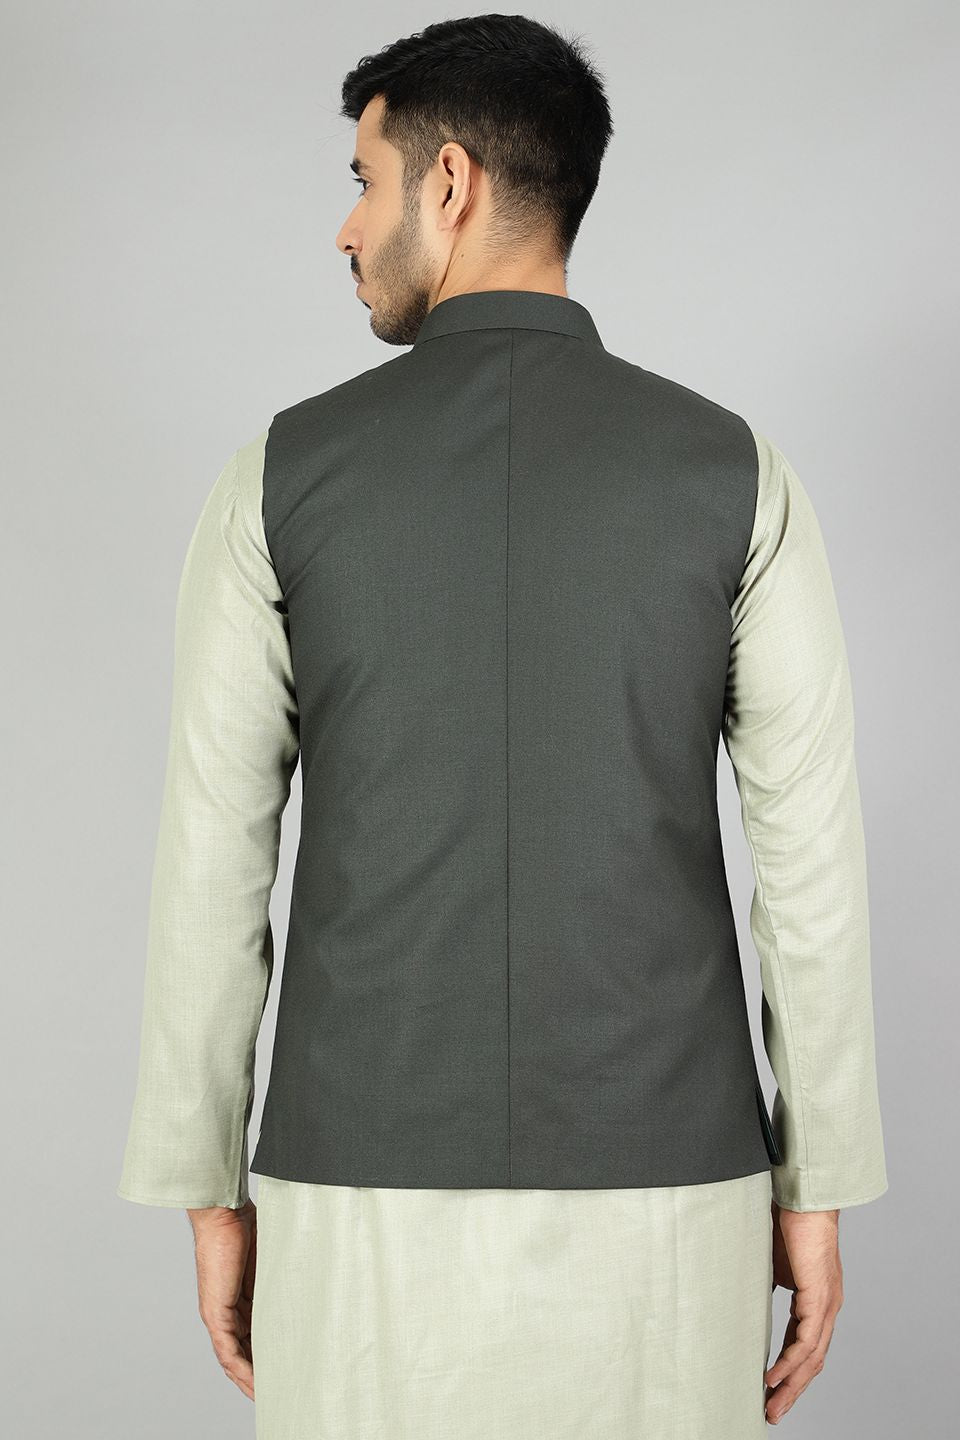 Polyester Cotton Plain Green Modi Nehru Jacket